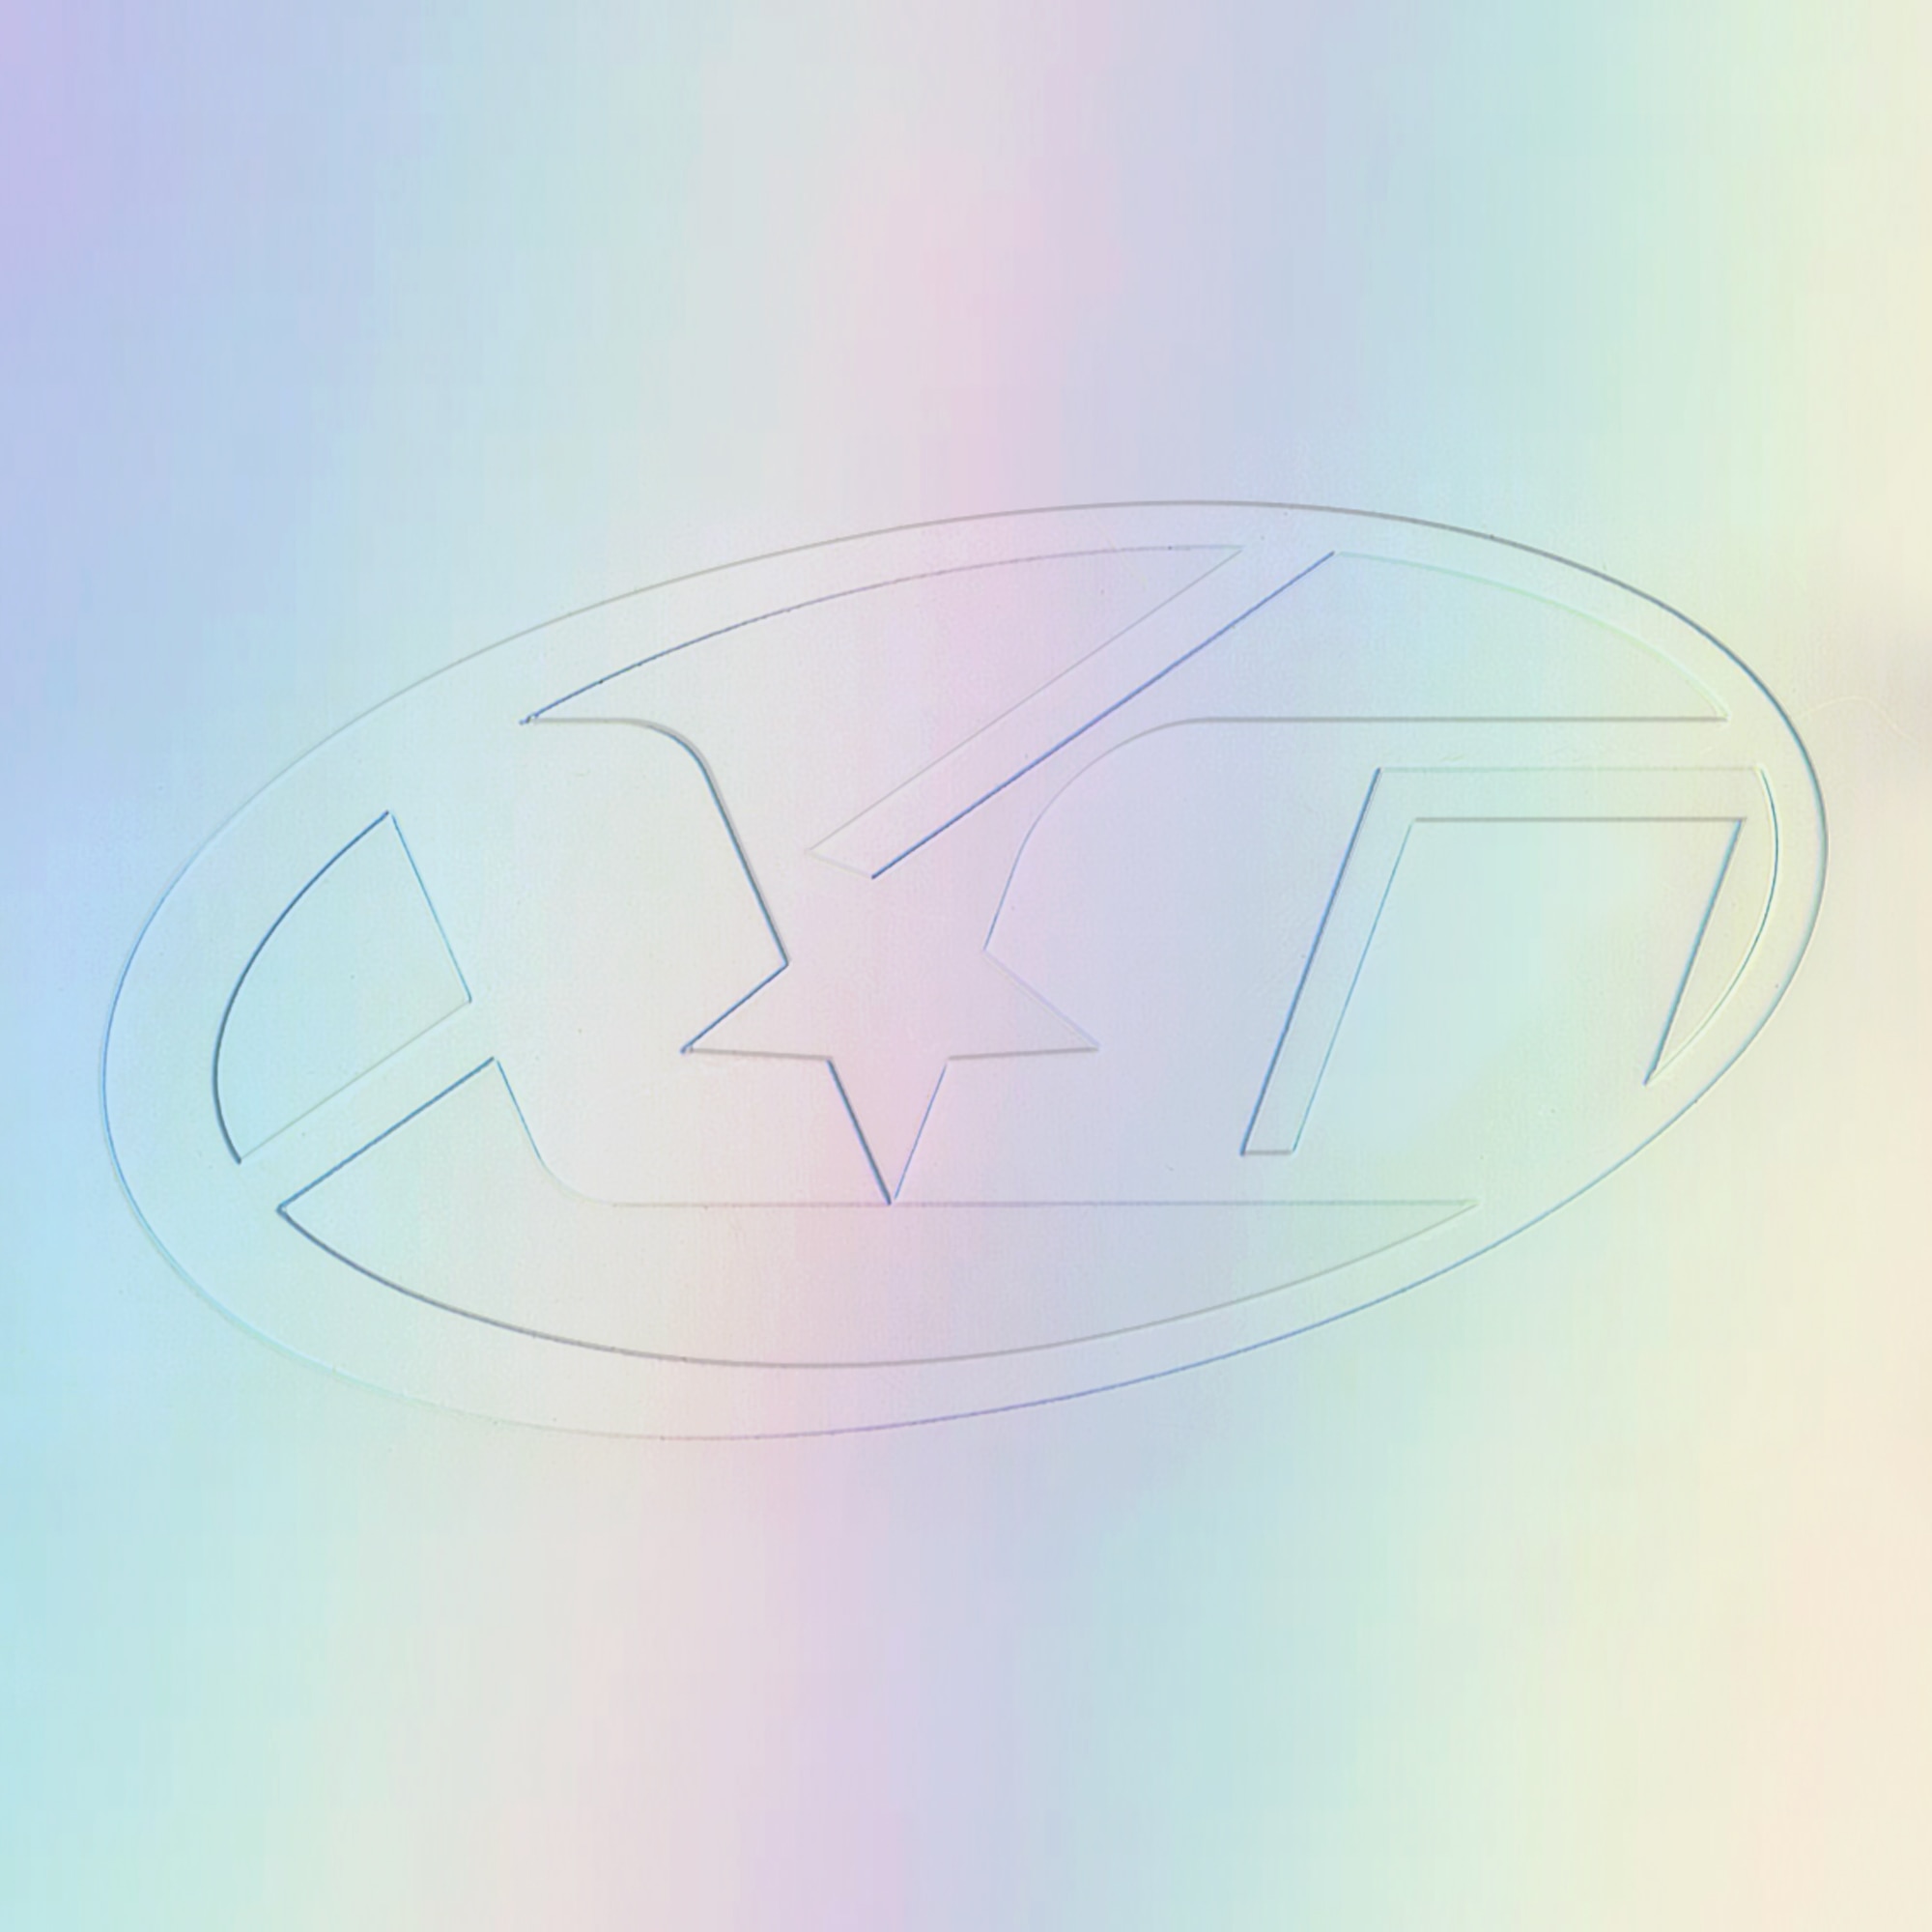 XG's 3rd single, “SHOOTING STAR” - Limited Edition CD Box Set 